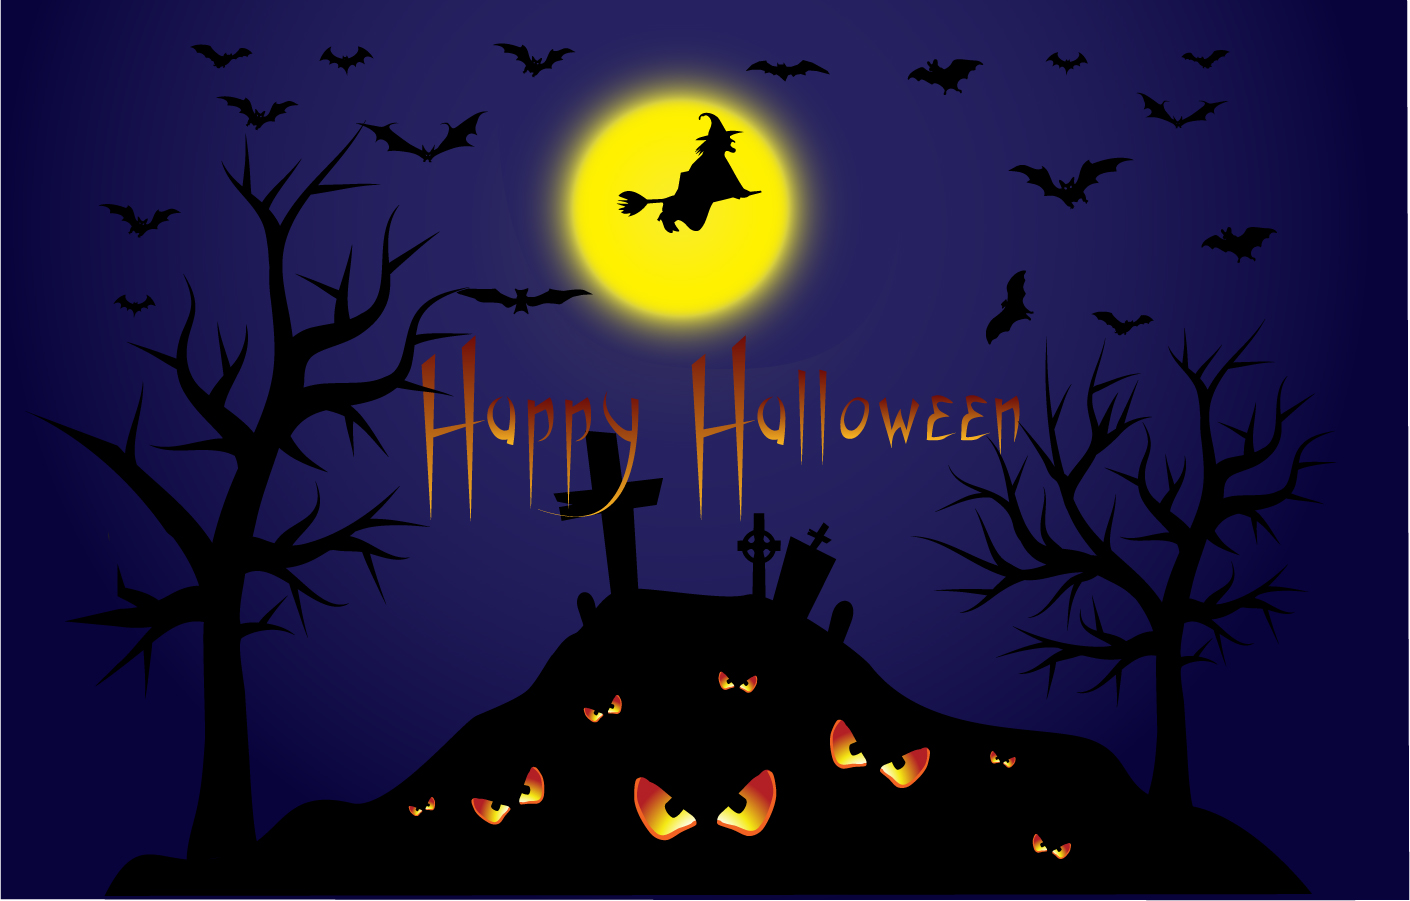 Bezierinfoベジェインフォ ハロウィンの怖い夜の背景 Halloween Scary Eyes Silhouette Tree Illustration イラスト素材